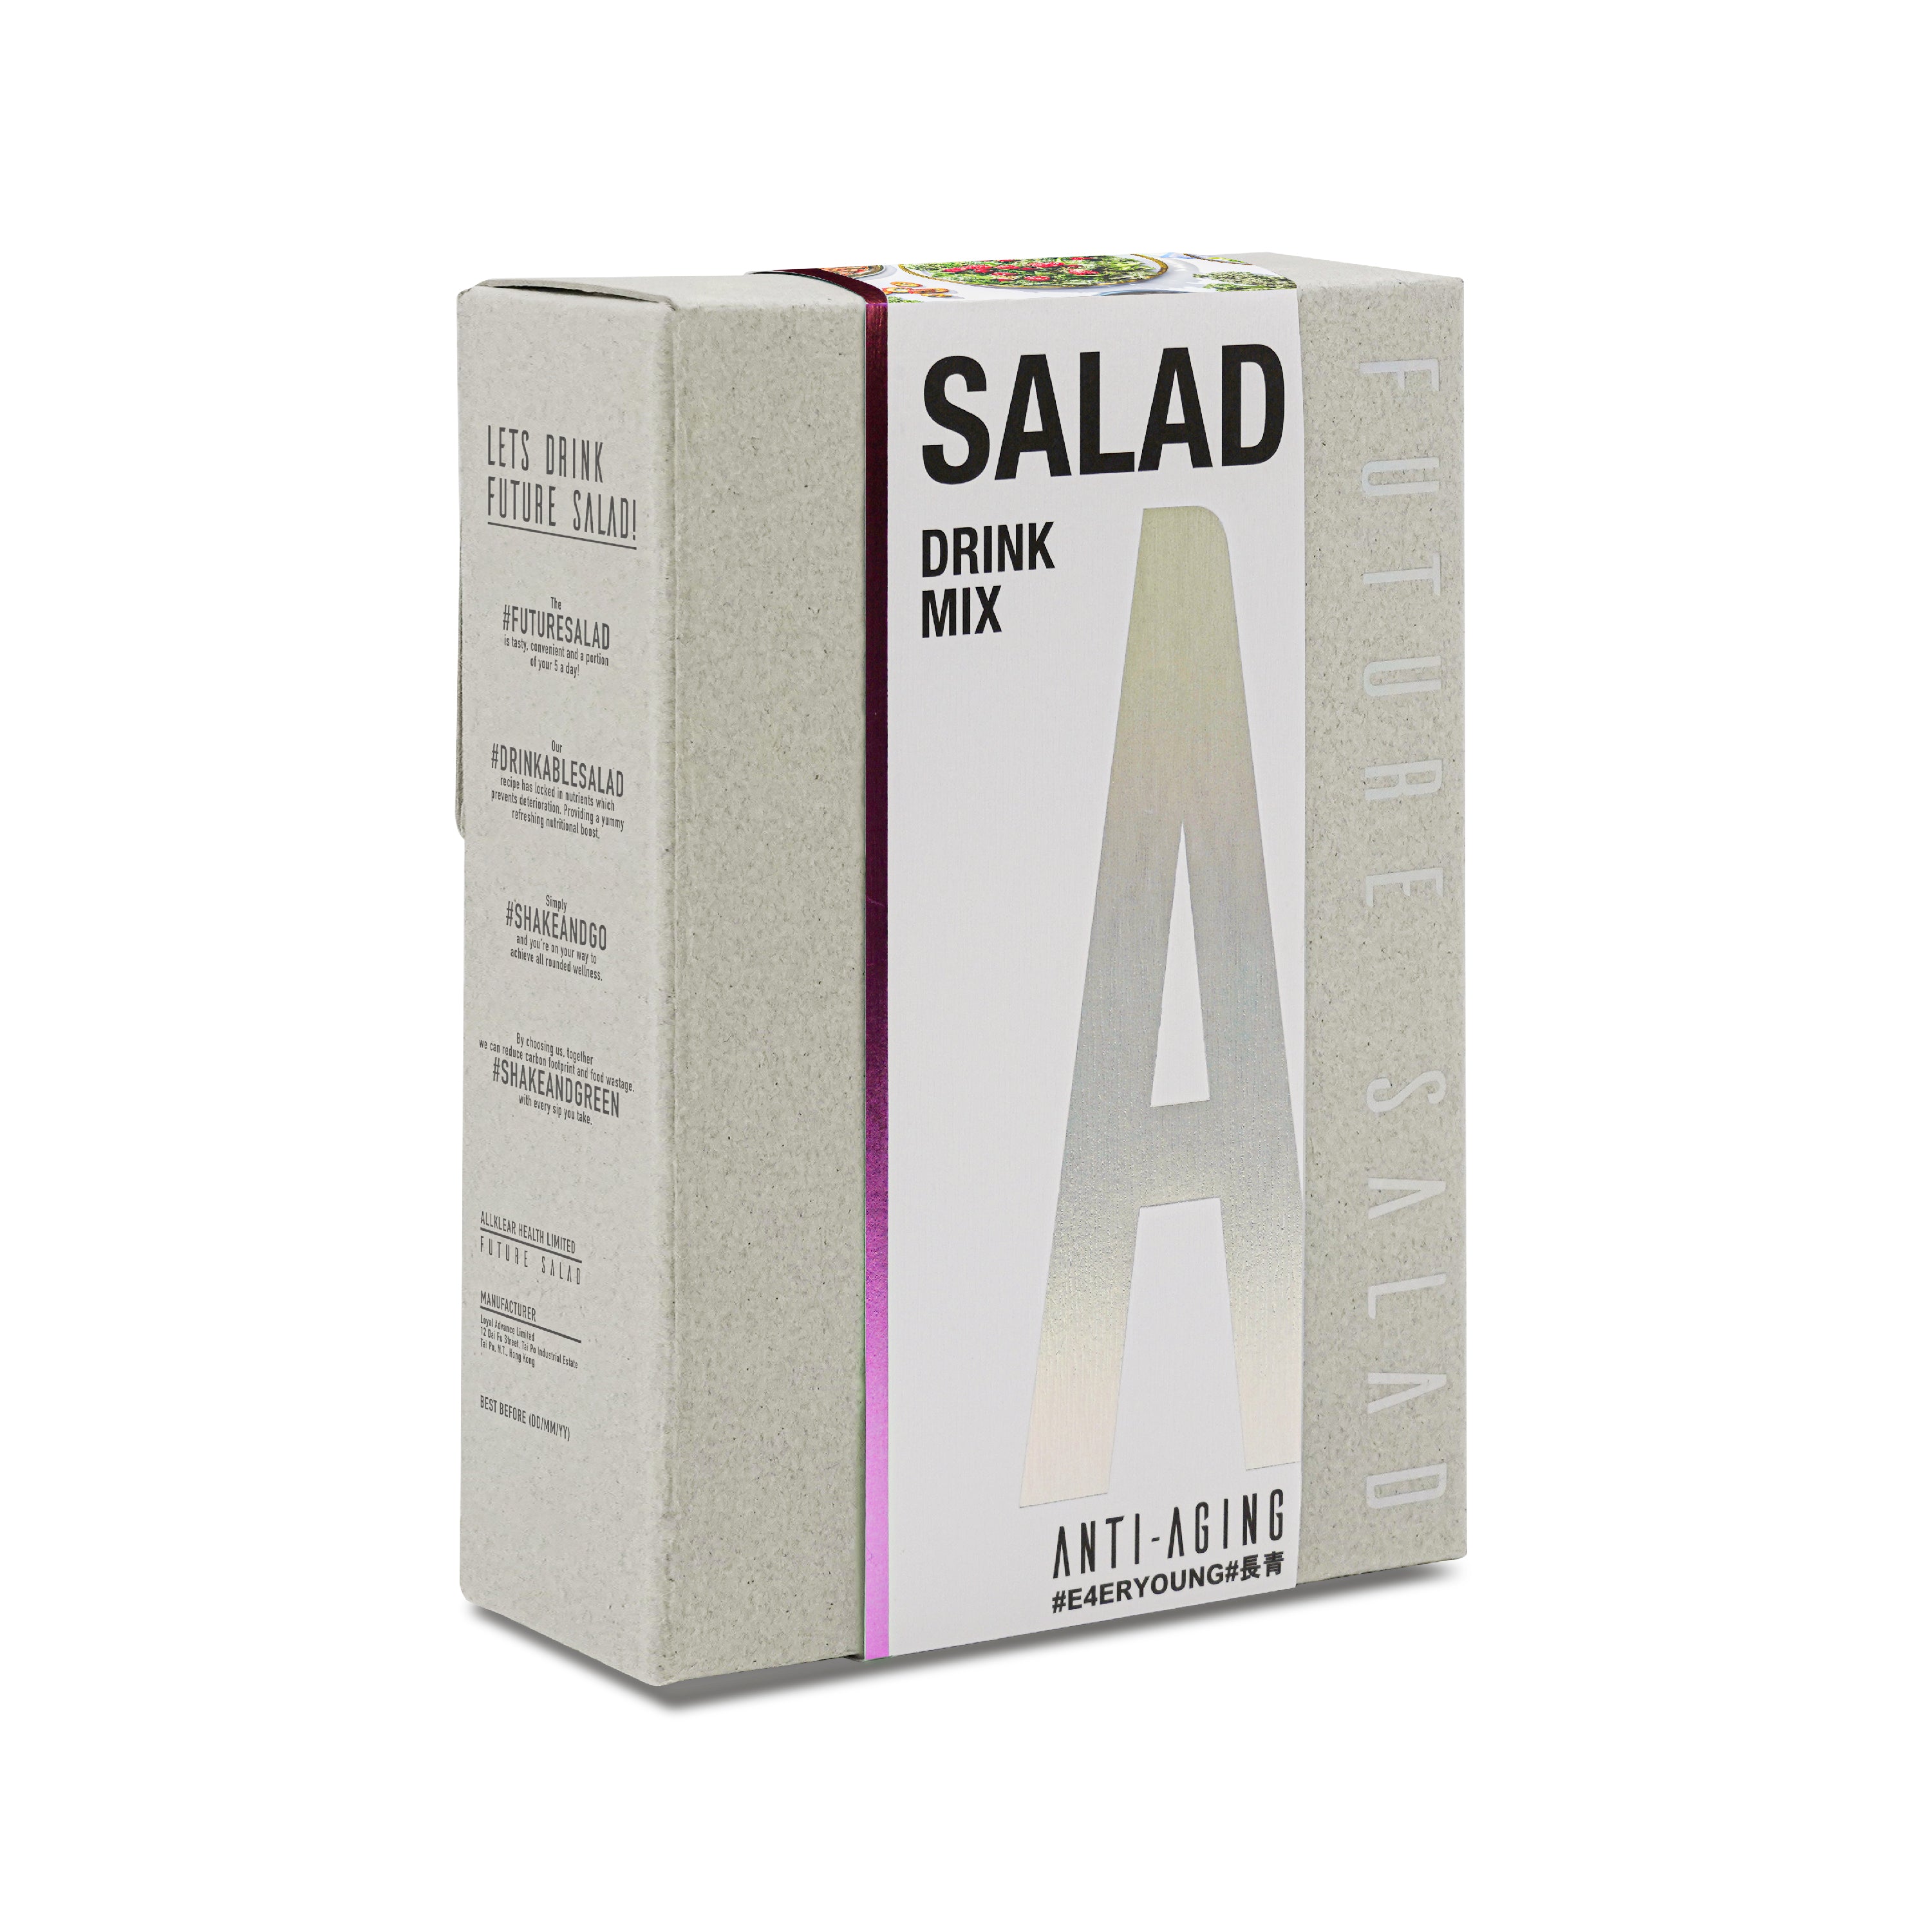 Lets Drink Future Salad | 凍齡新沙律 Anti-Aging Salad Drink Mix 7包裝 | Future Salad